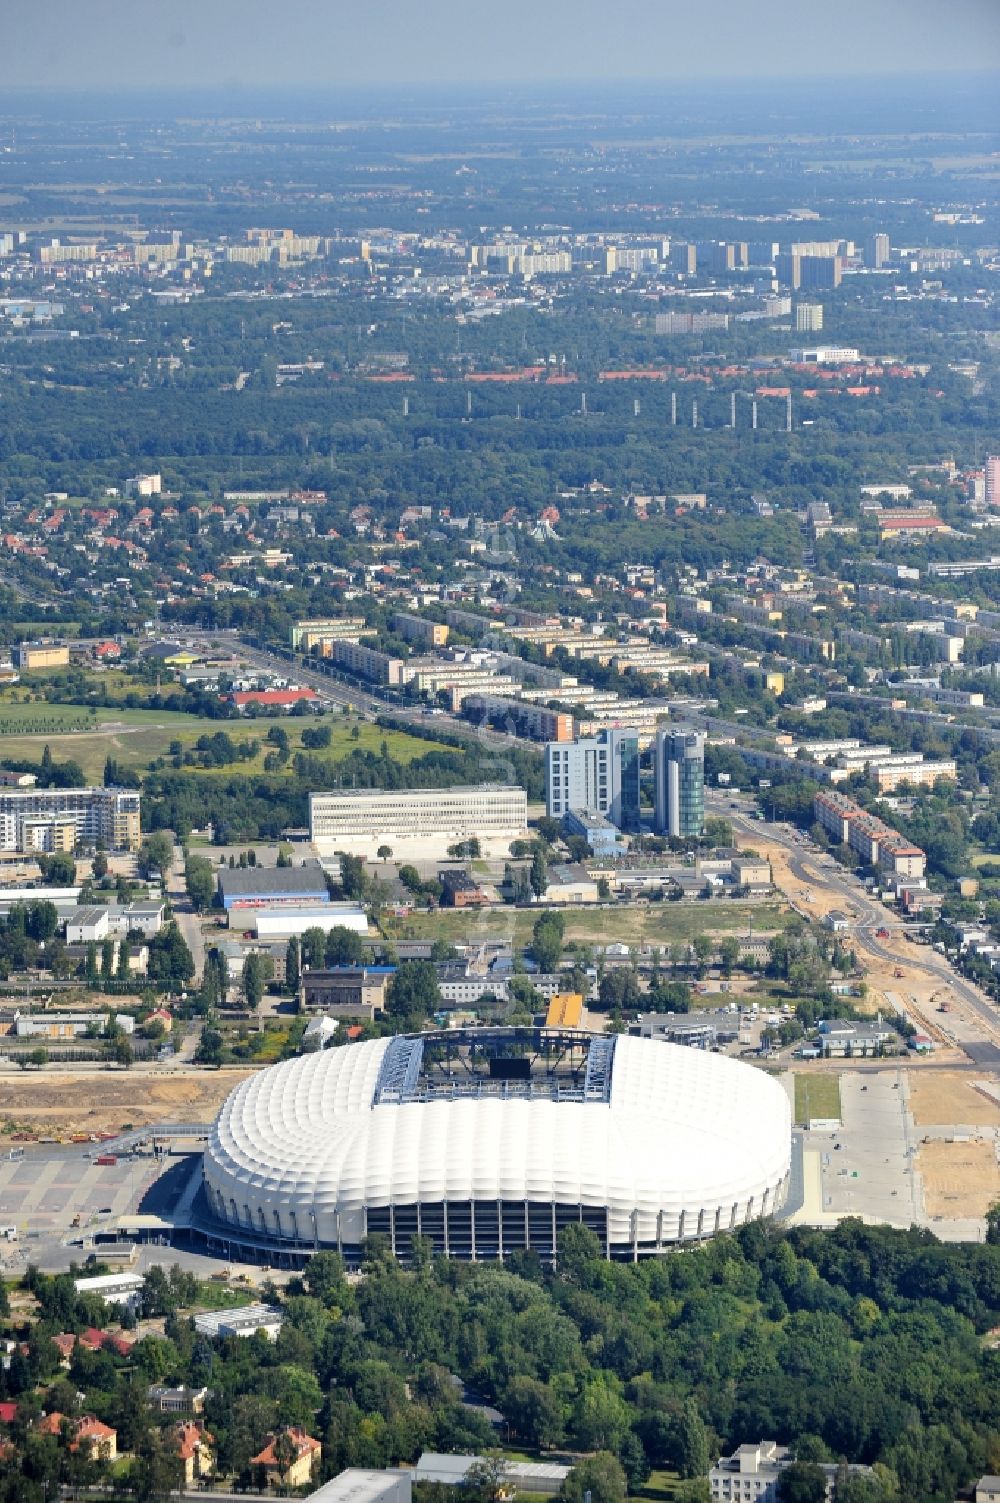 Luftaufnahme Poznan - Arena des Stadion Stadion Miejski - INEA Stadion in Poznan - Posen in Wielkopolskie - Großpolen, Polen